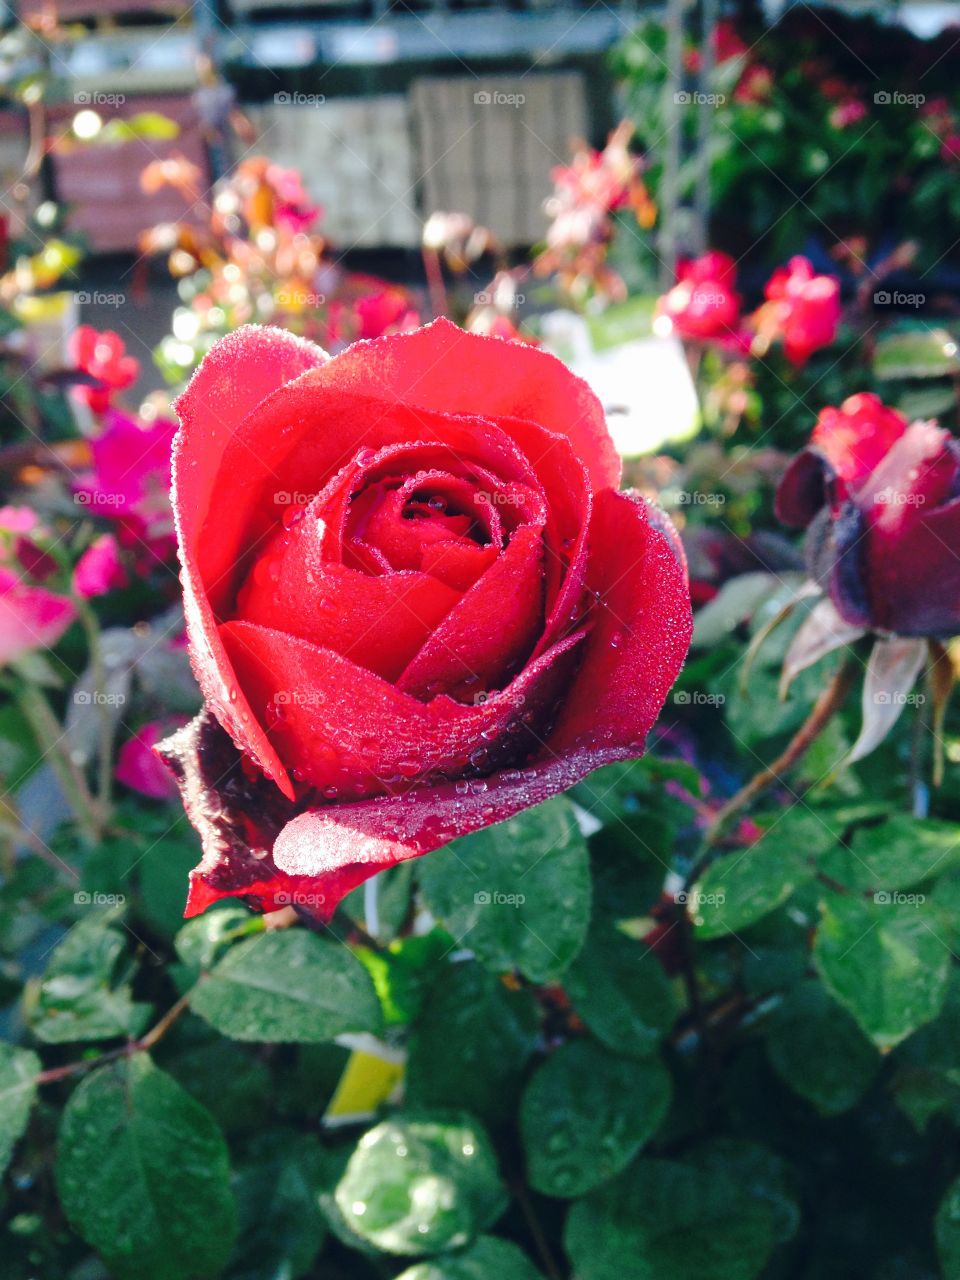 Sunlight on red rose